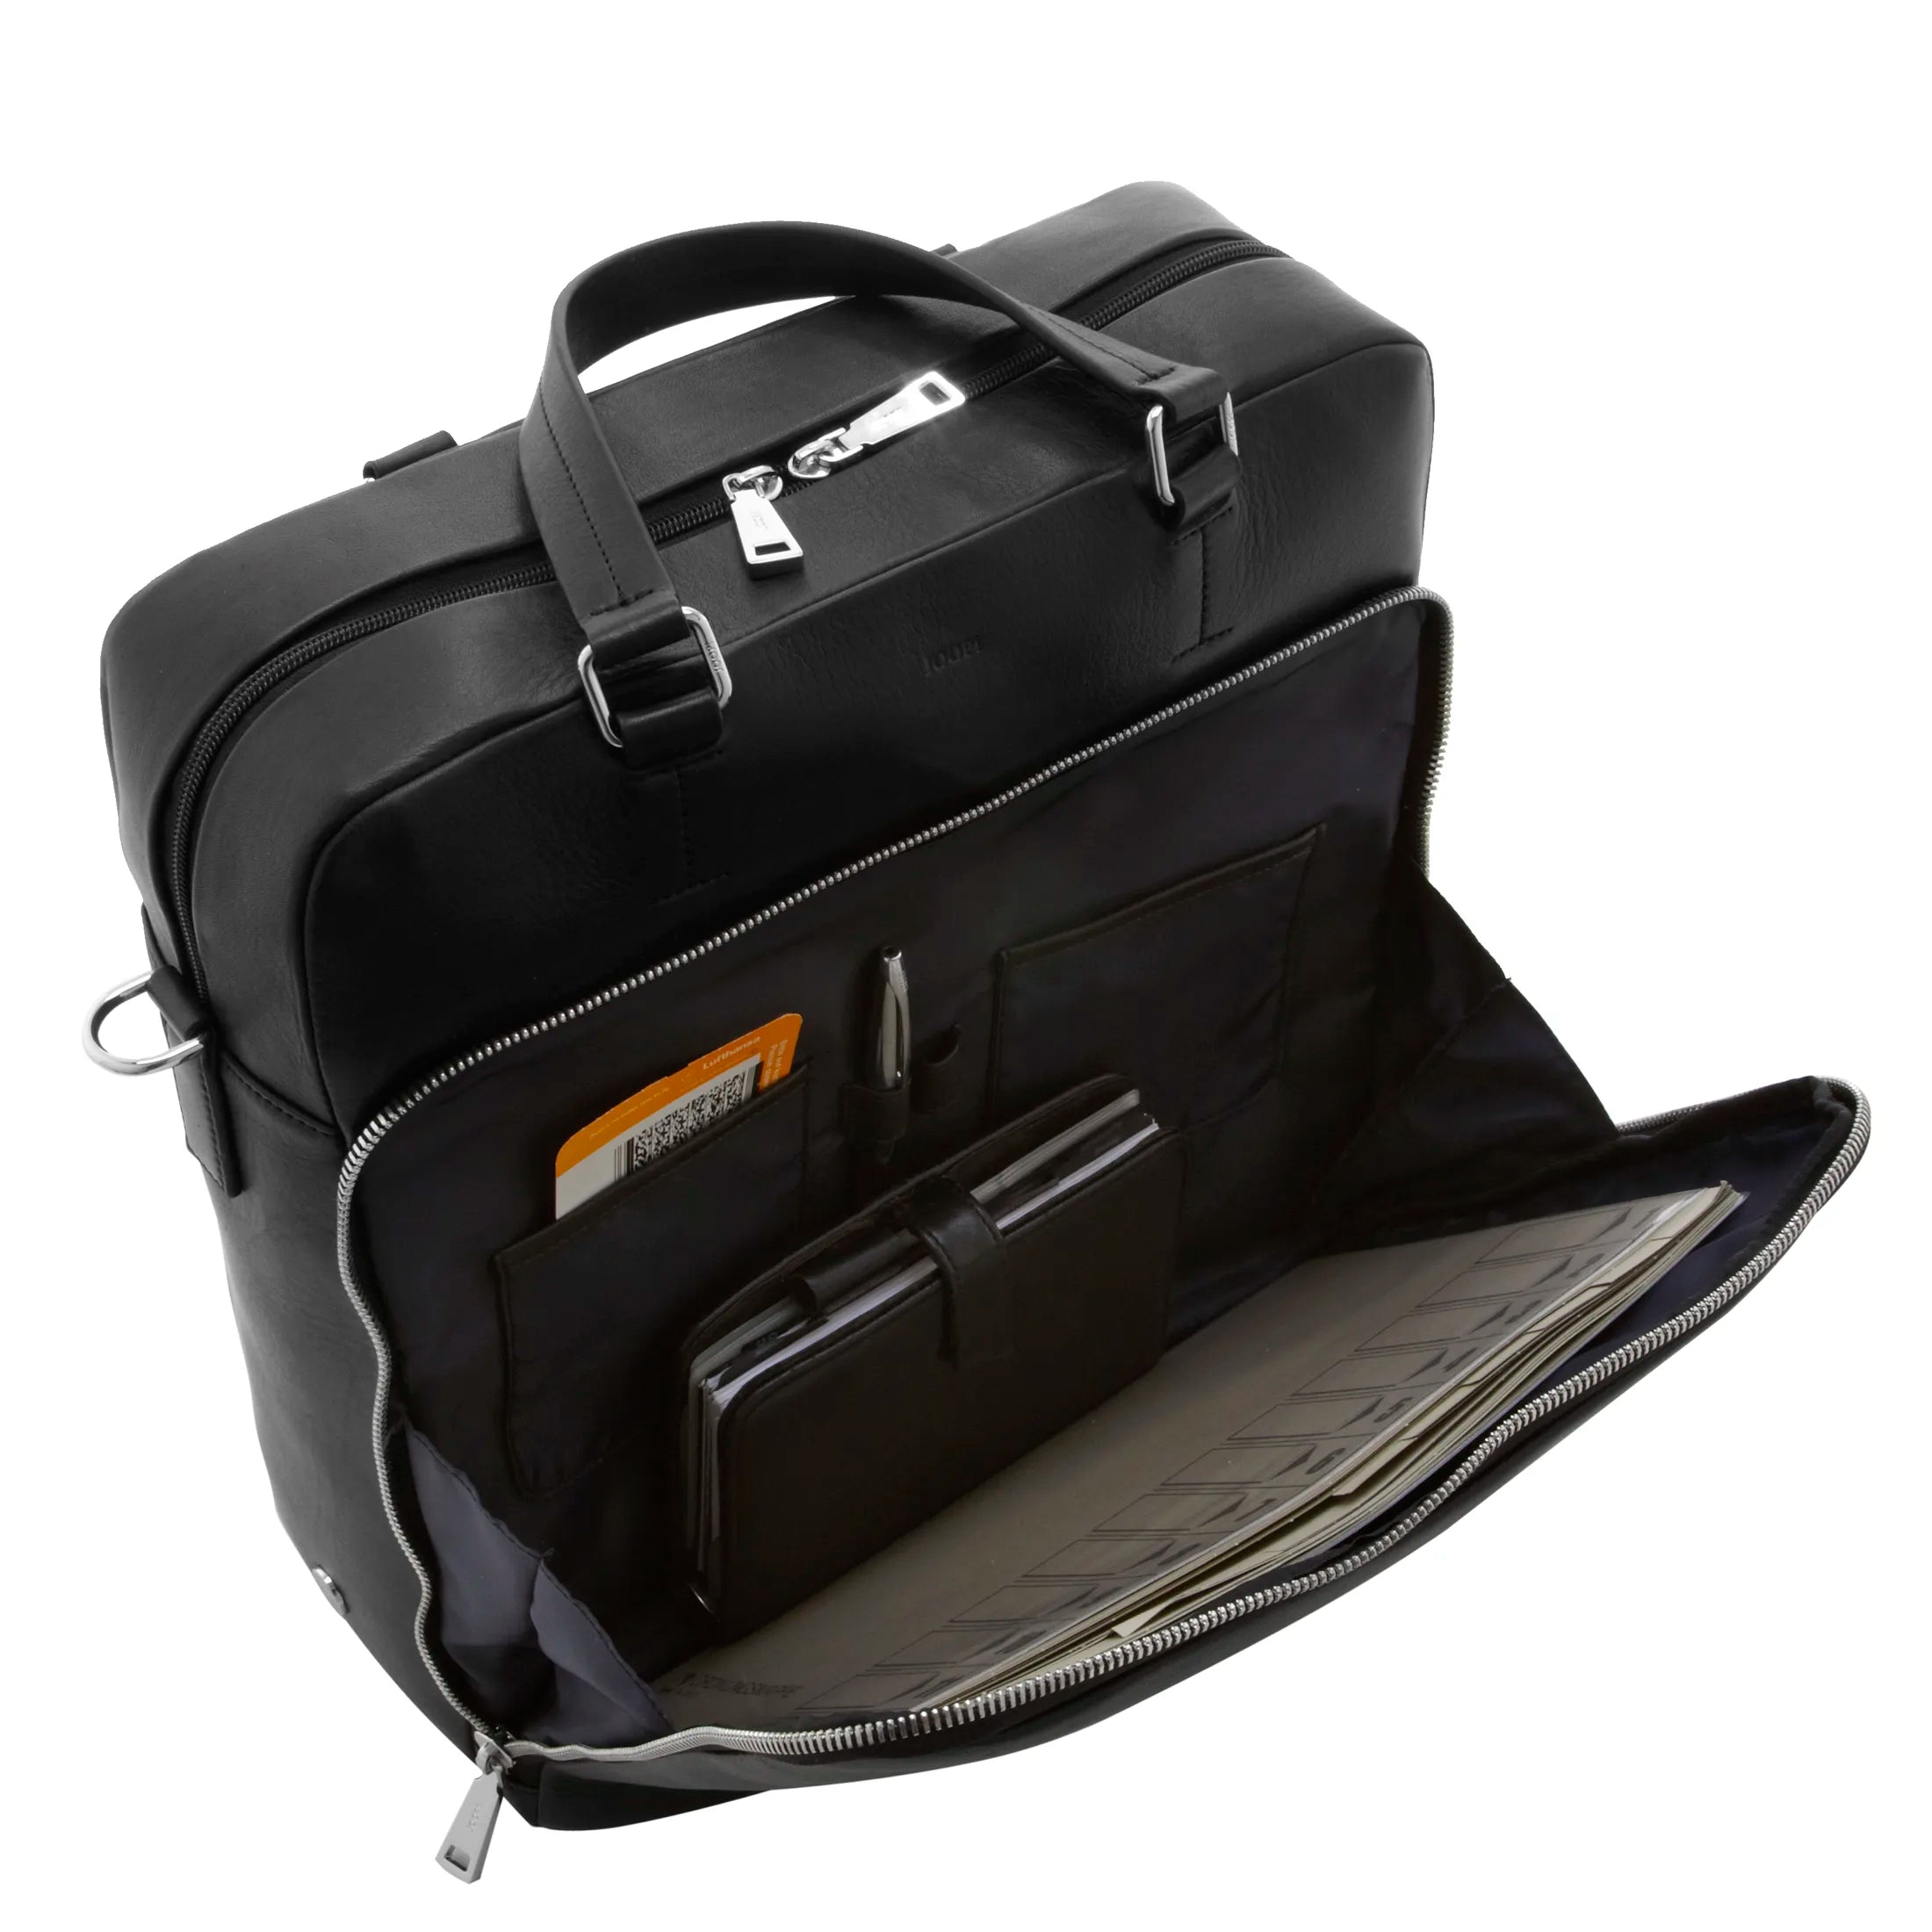 Joop Soft Leather Sinon Briefbag laptop bag 40 cm - black